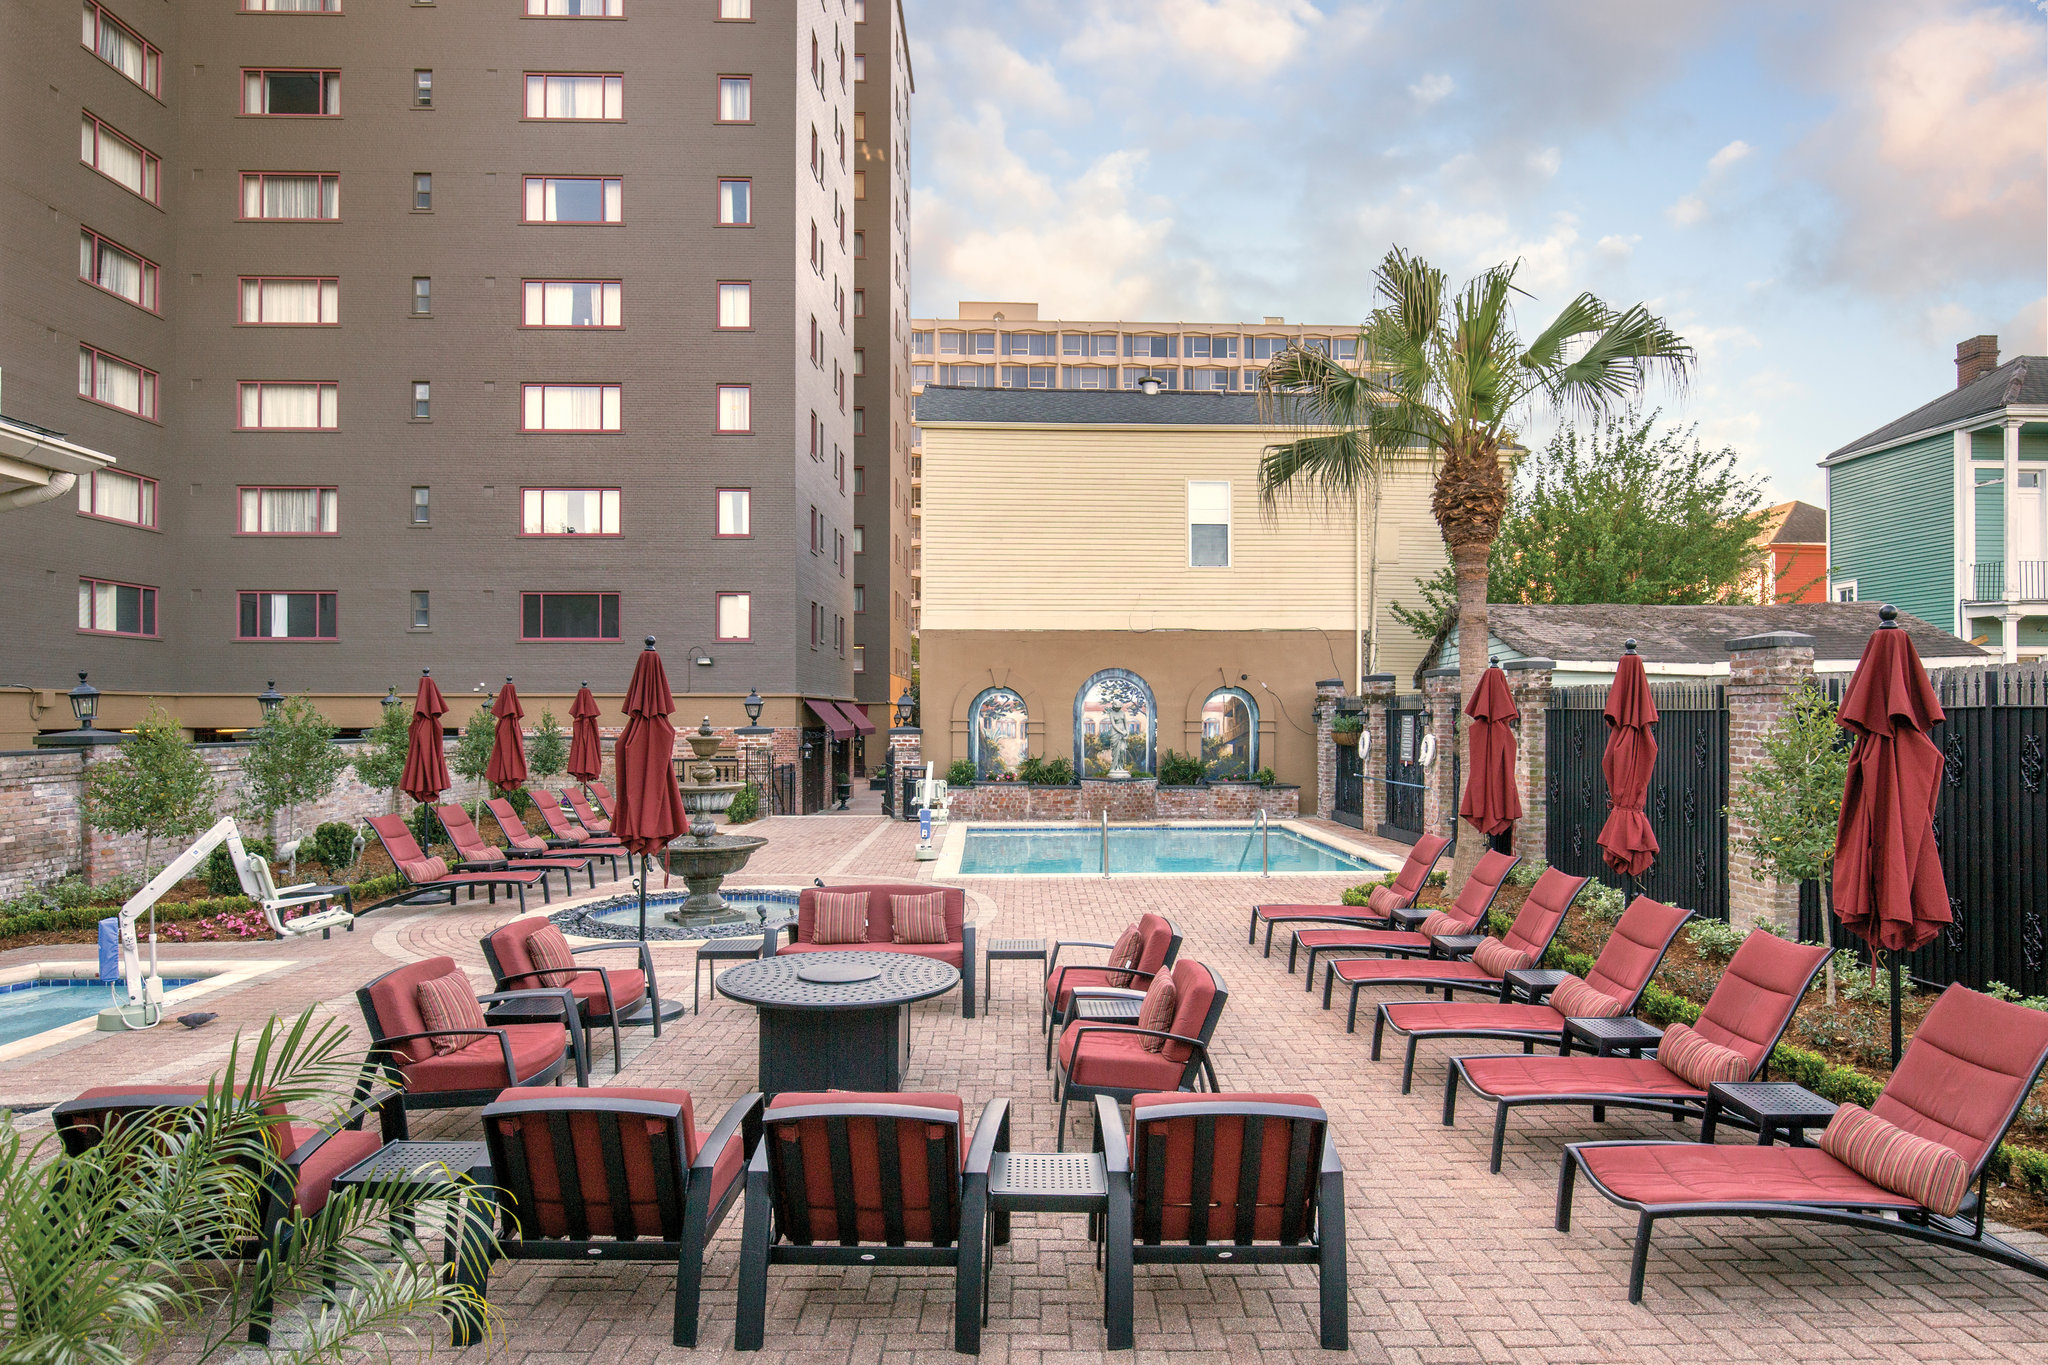 Avenue Plaza Resort for retreats in Louisiana